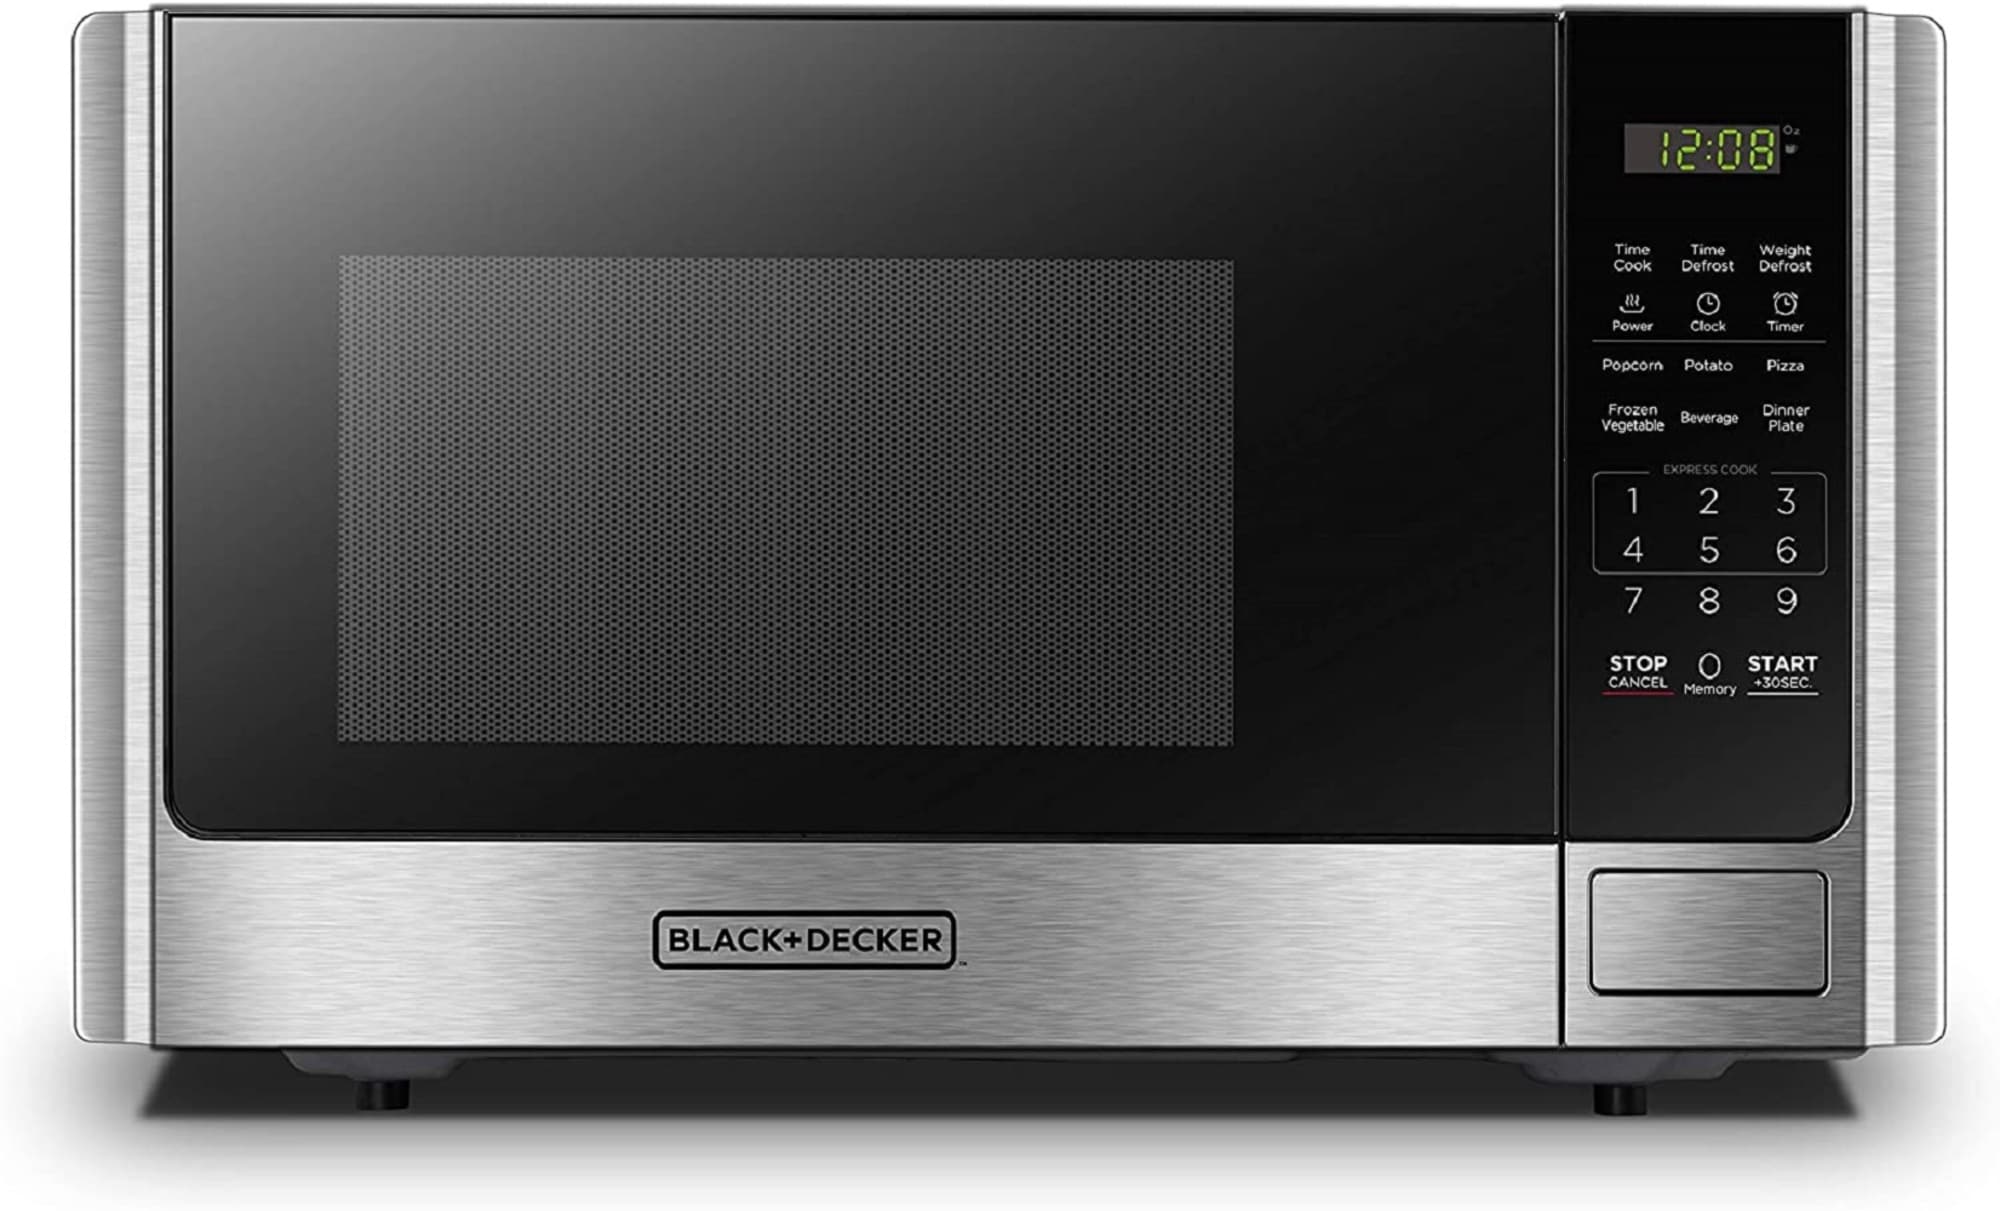 Black + Decker BLACK+DECKER 0.7 Cubic Feet Countertop Microwave